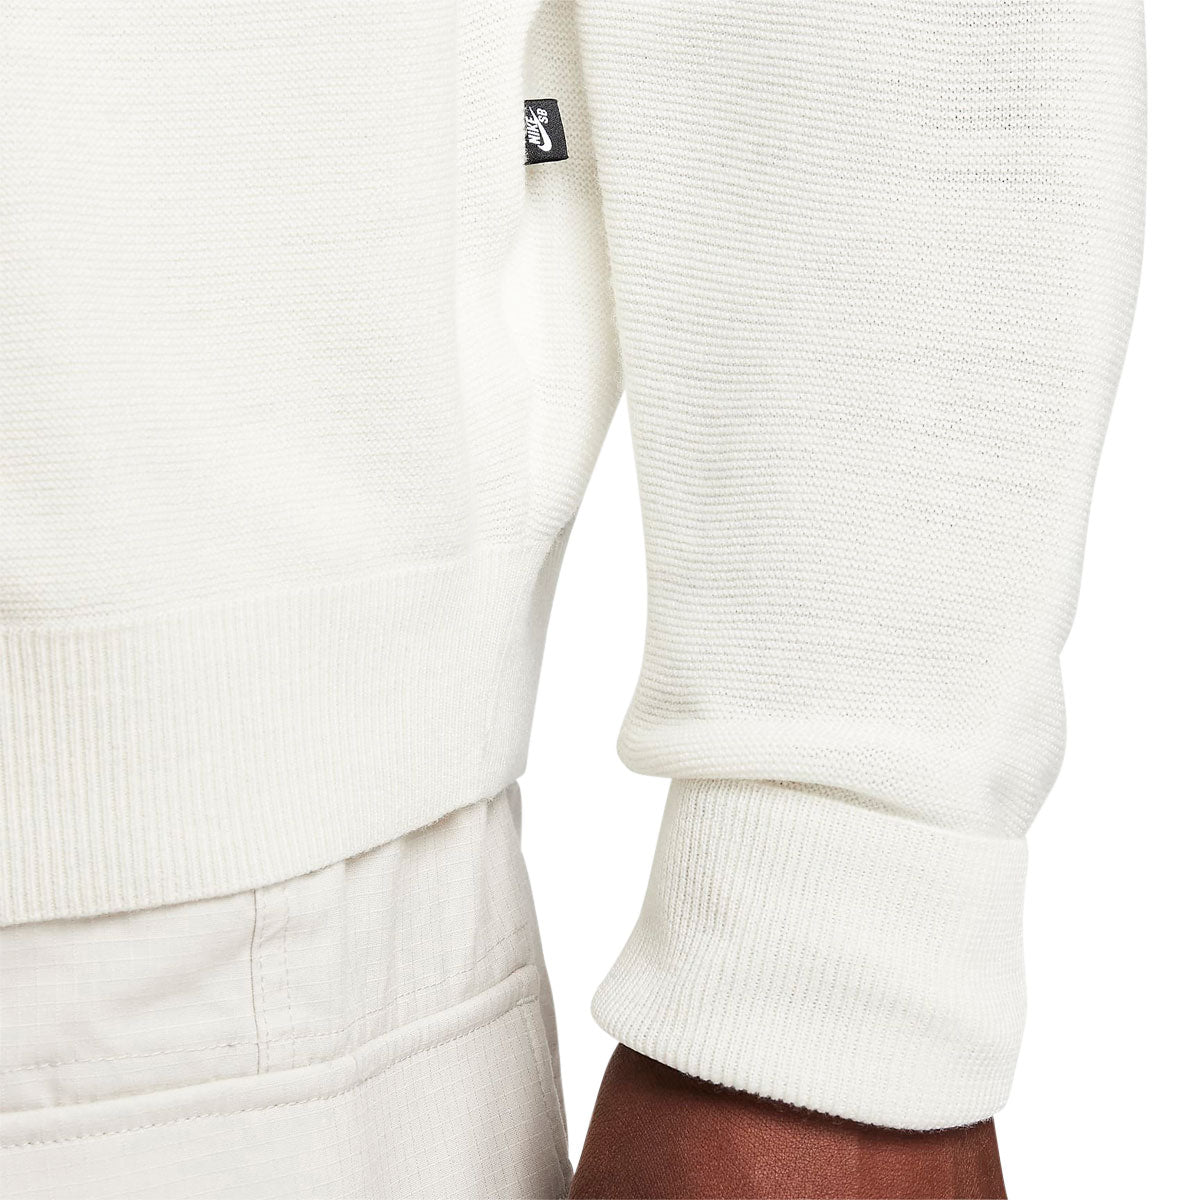 Nike SB Skate Cardigan Sweater - Light Bone/White image 4